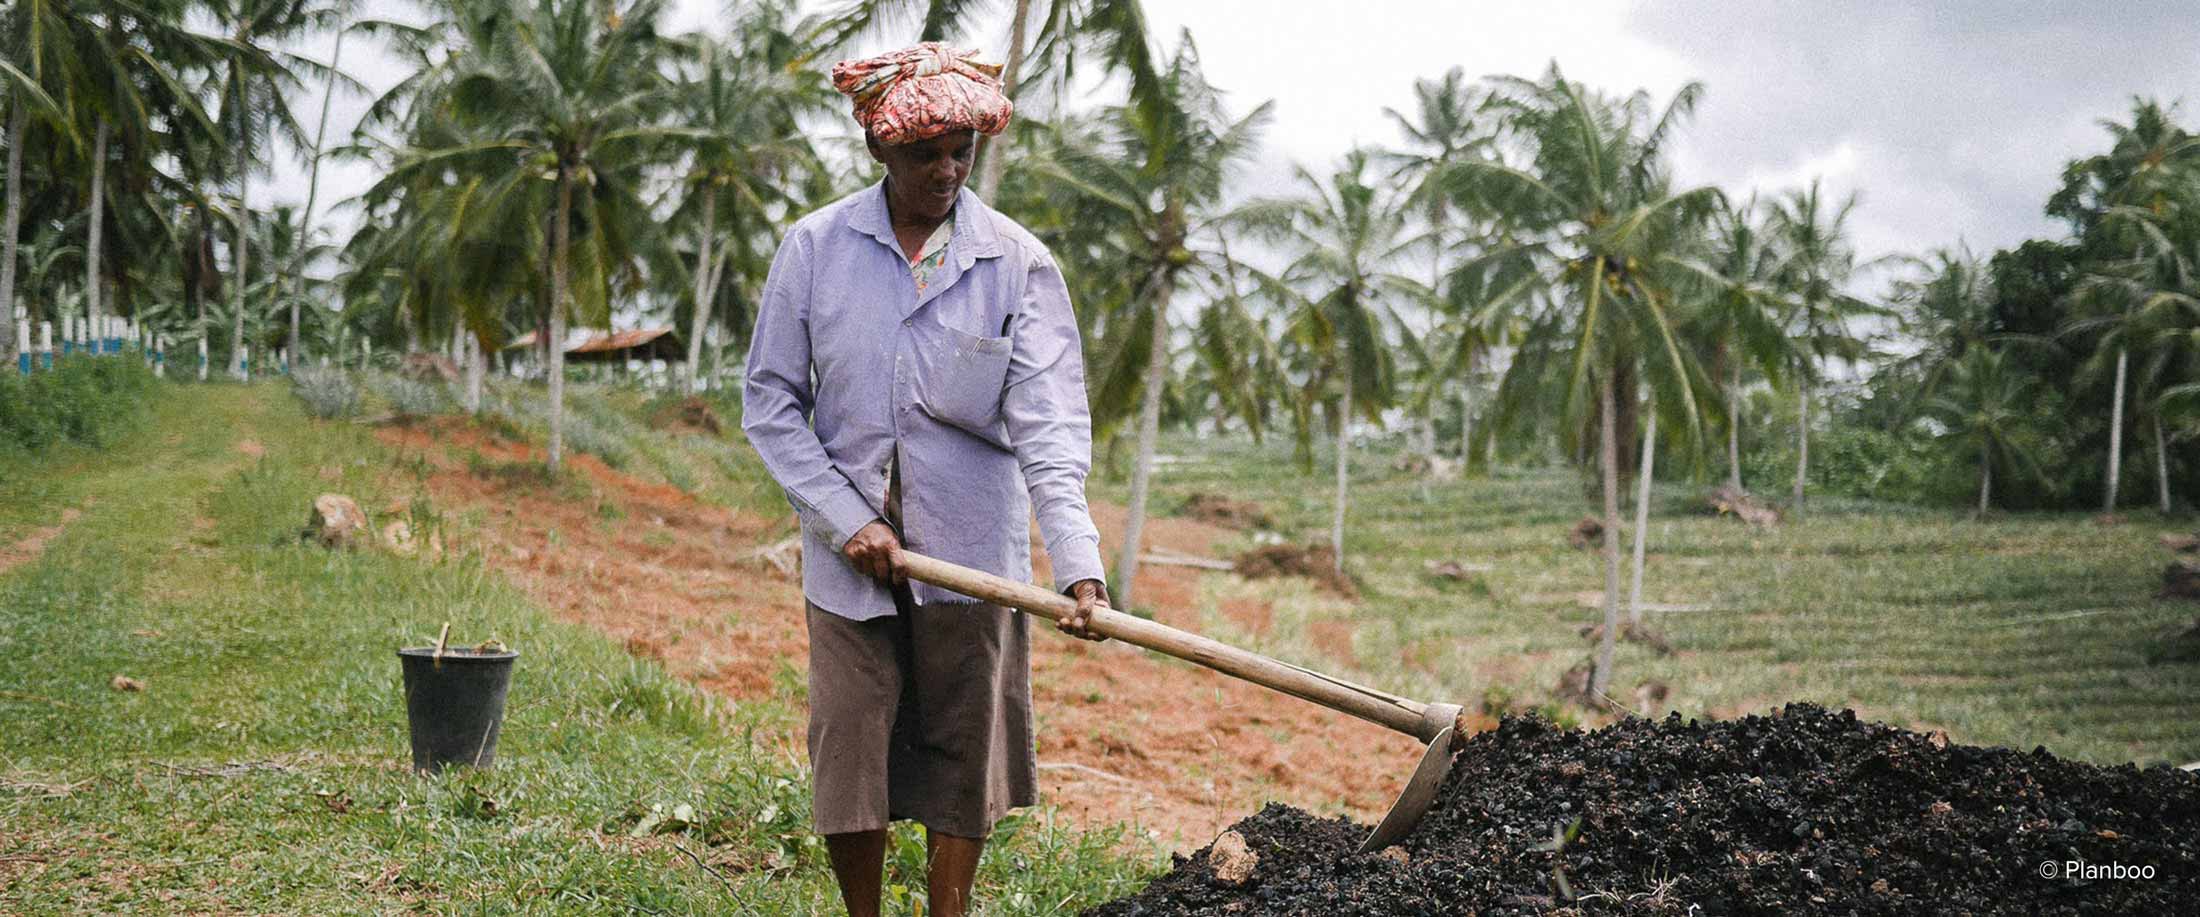 Biochar carbon removal project at Elpitaya Plantations in Sri Lanka